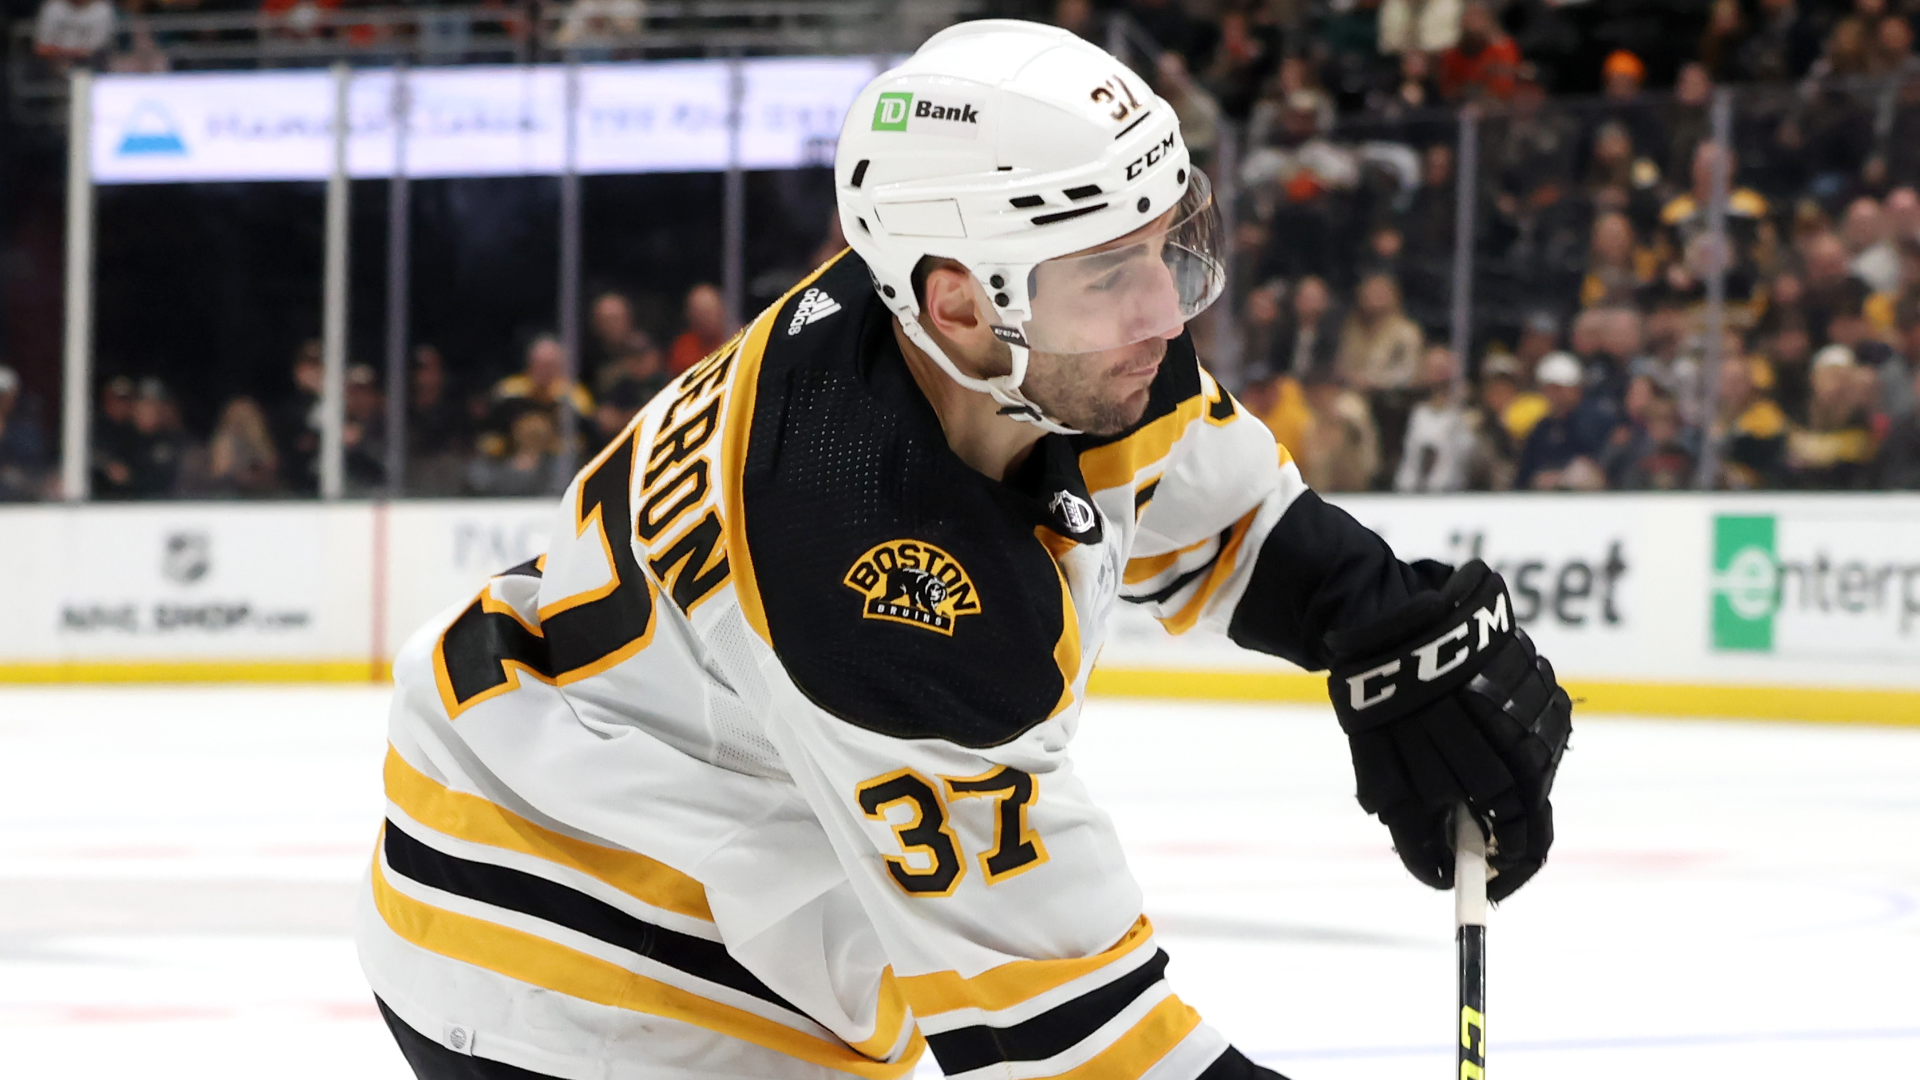 Bergeron skates again Thursday morning, but Bruins not sure if he'll travel  to Florida - CBS Boston